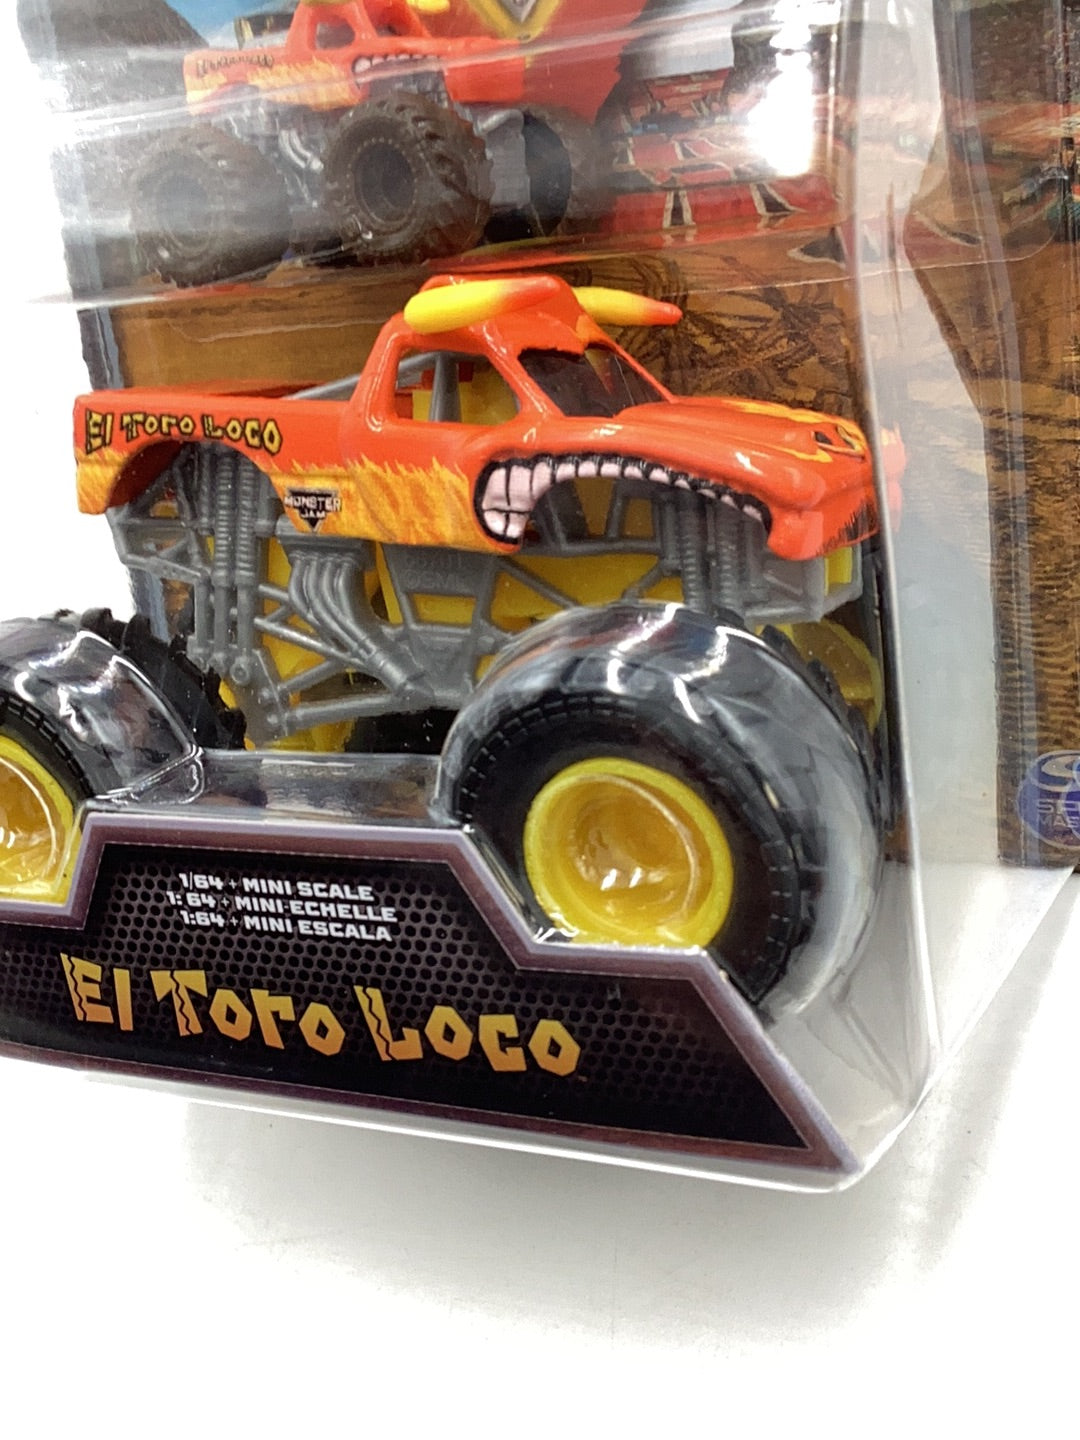 2024 monster jam El Toro Loco with mini El Toro Loco regalo 134C